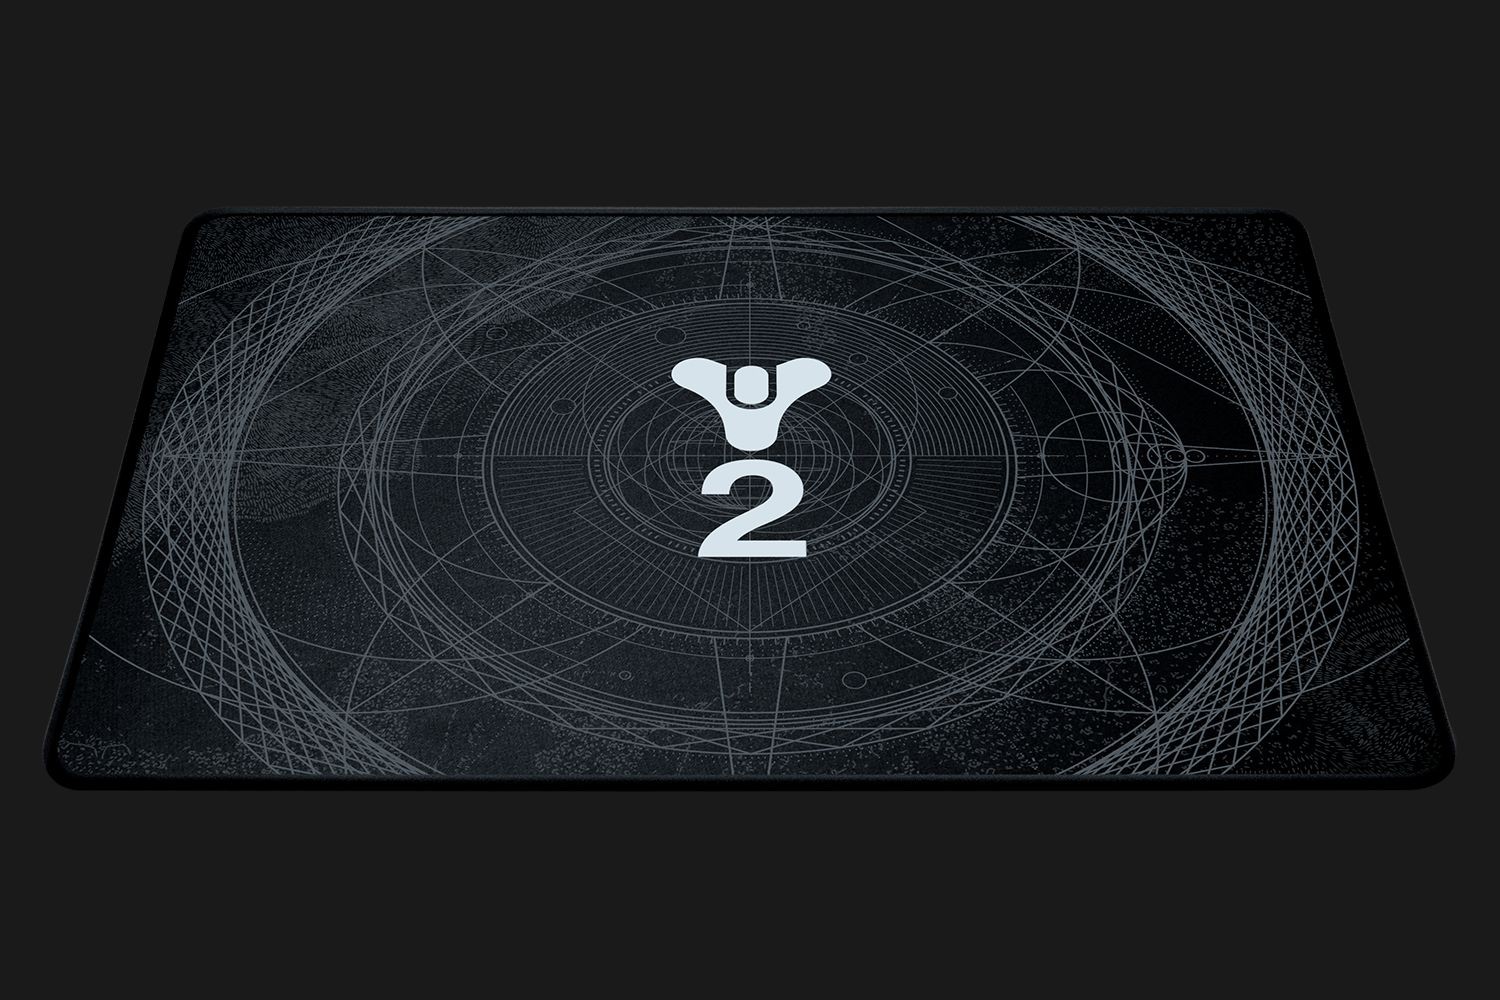 Razer Goliathus - Medium (Speed) - Destiny 2 Ed. surface